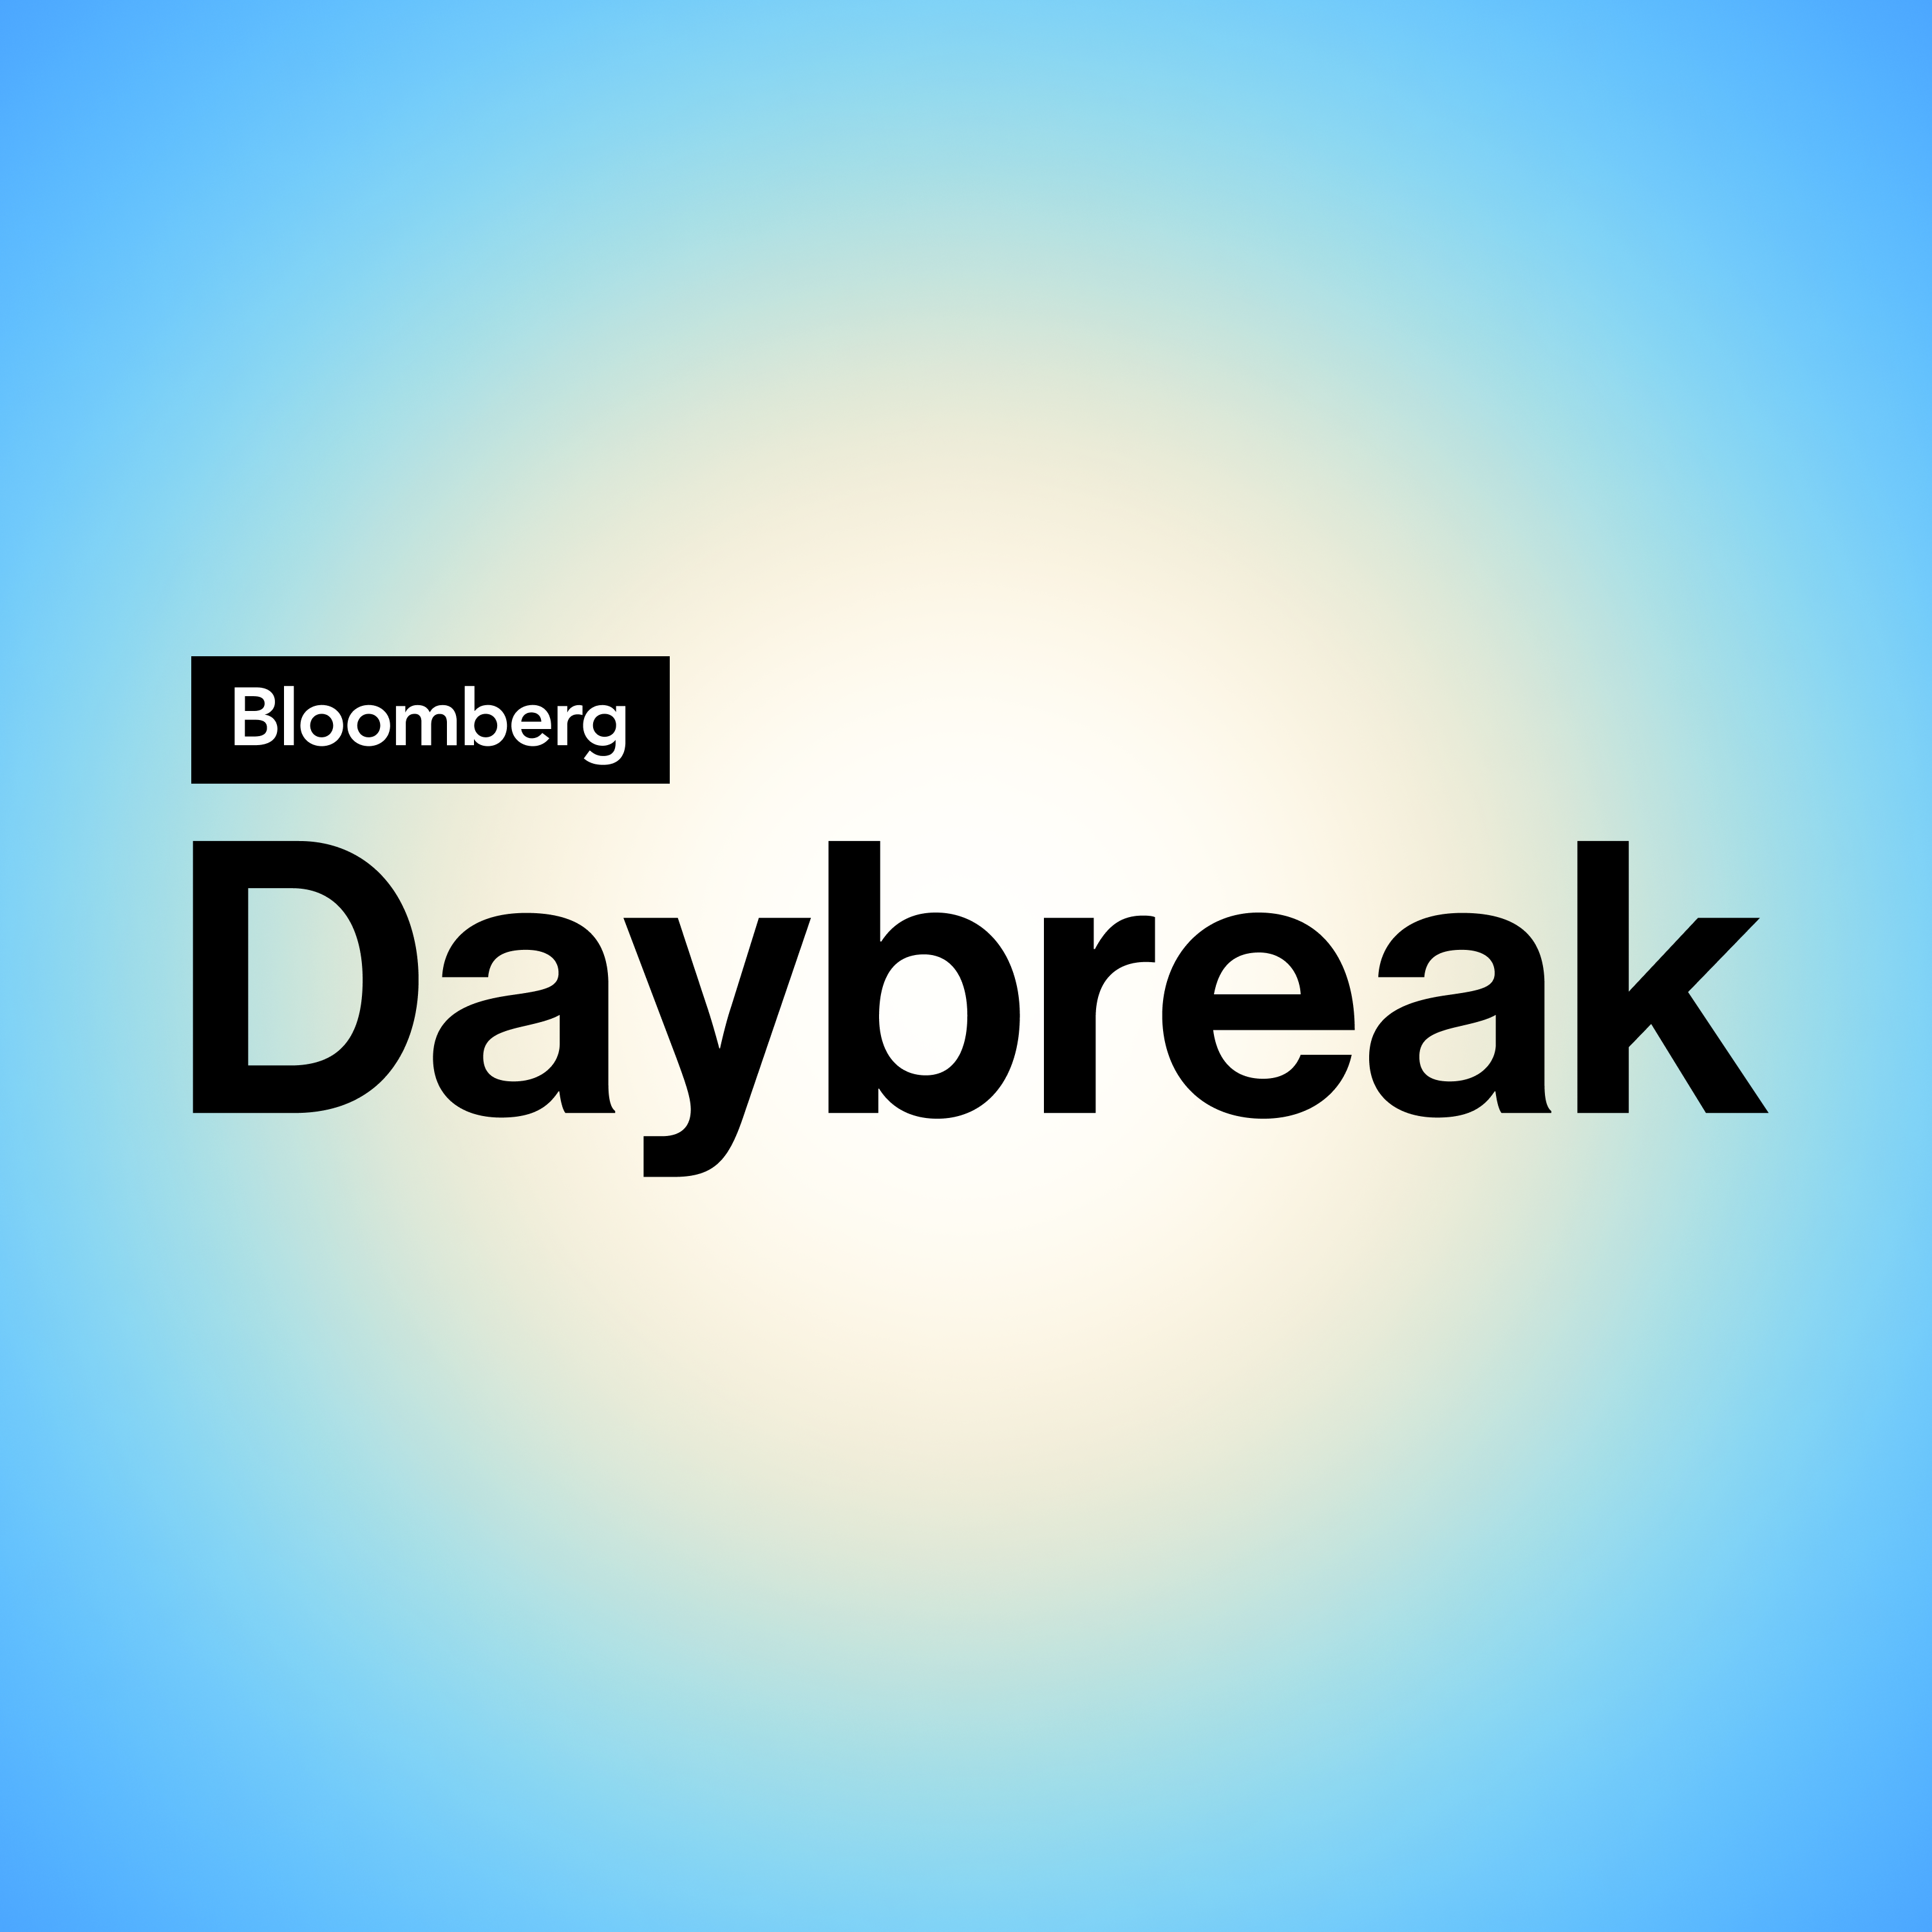 Daybreak Weekend: Apple Earnings, Jobs Report, Central Banks